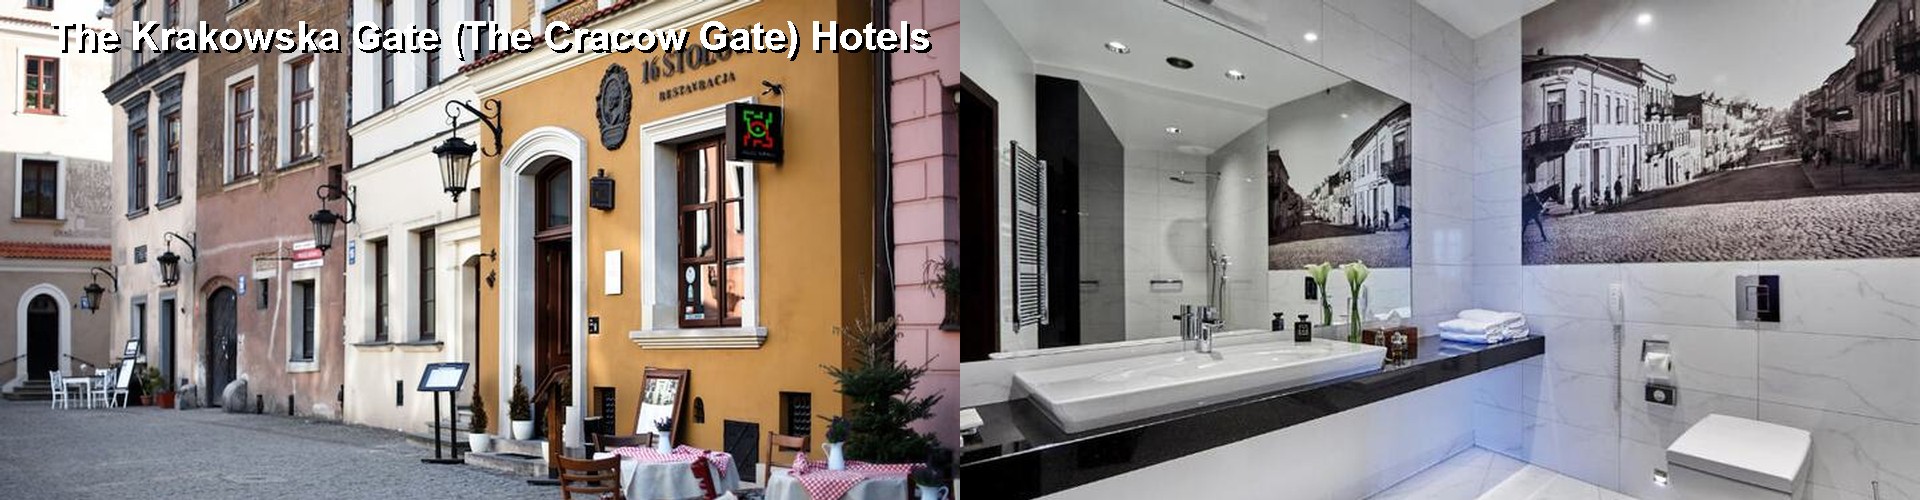 2 Best Hotels near The Krakowska Gate (The Cracow Gate)